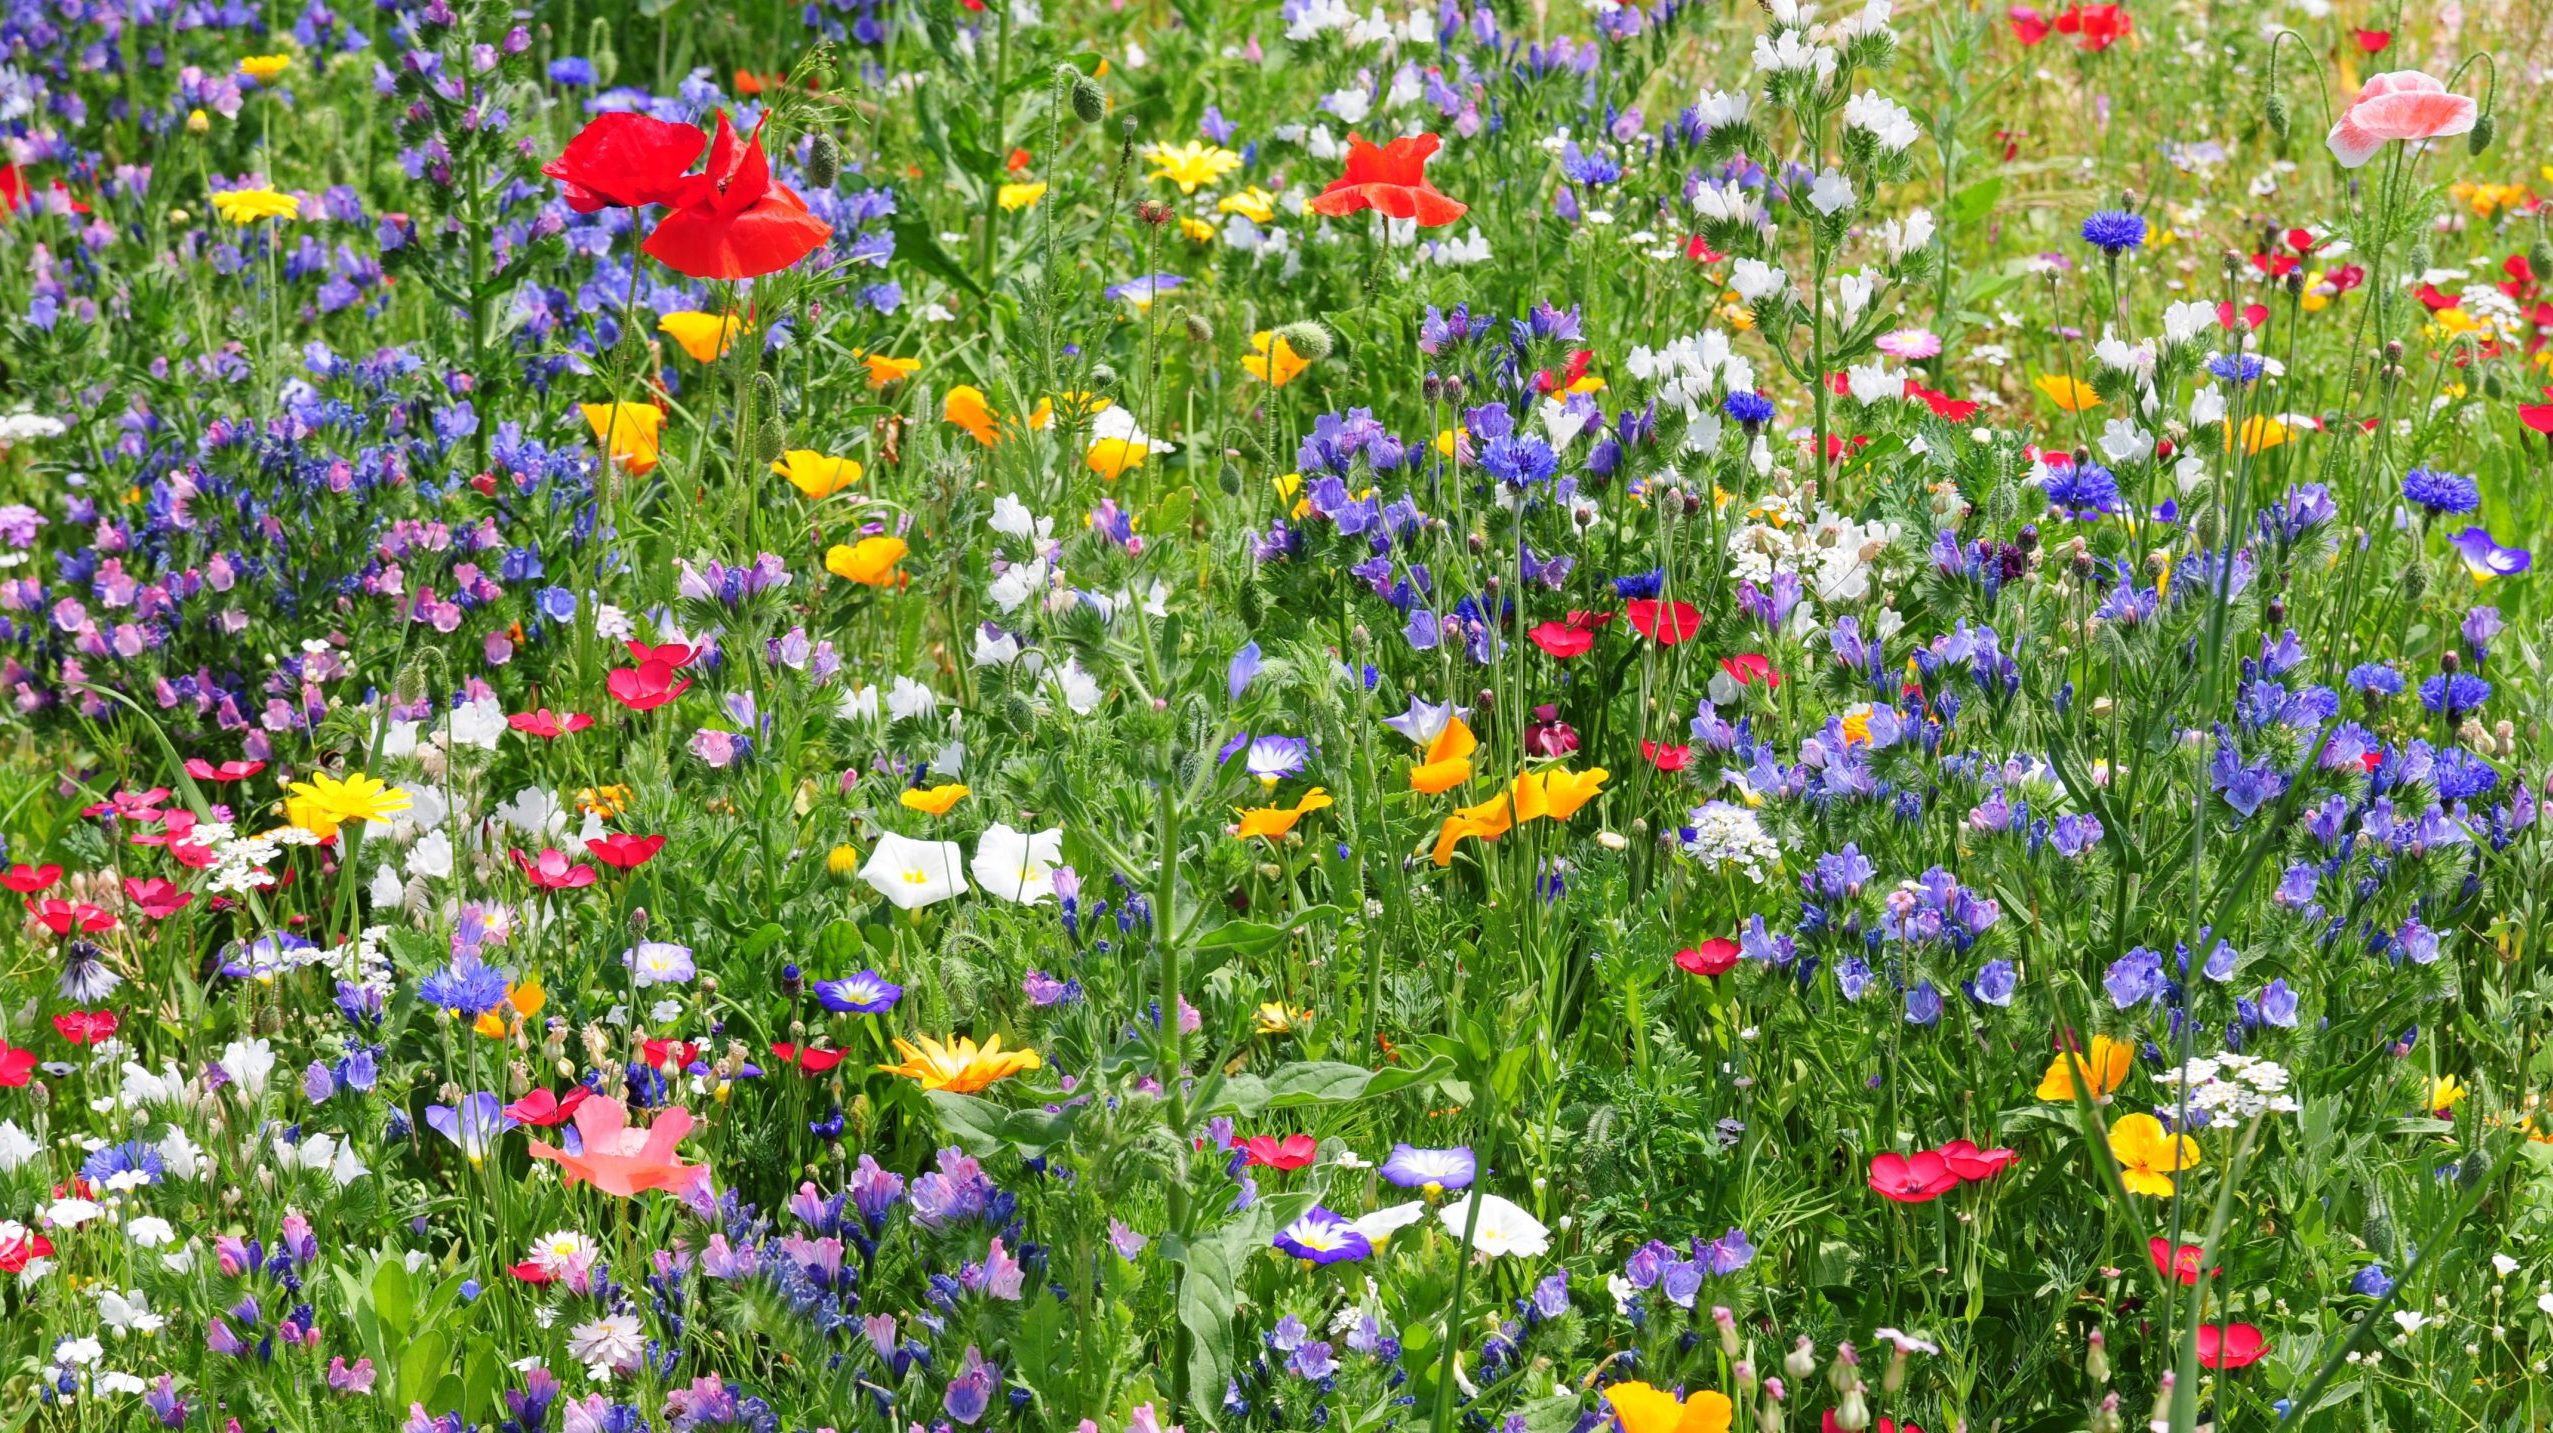 Wildflowers in many colors in field